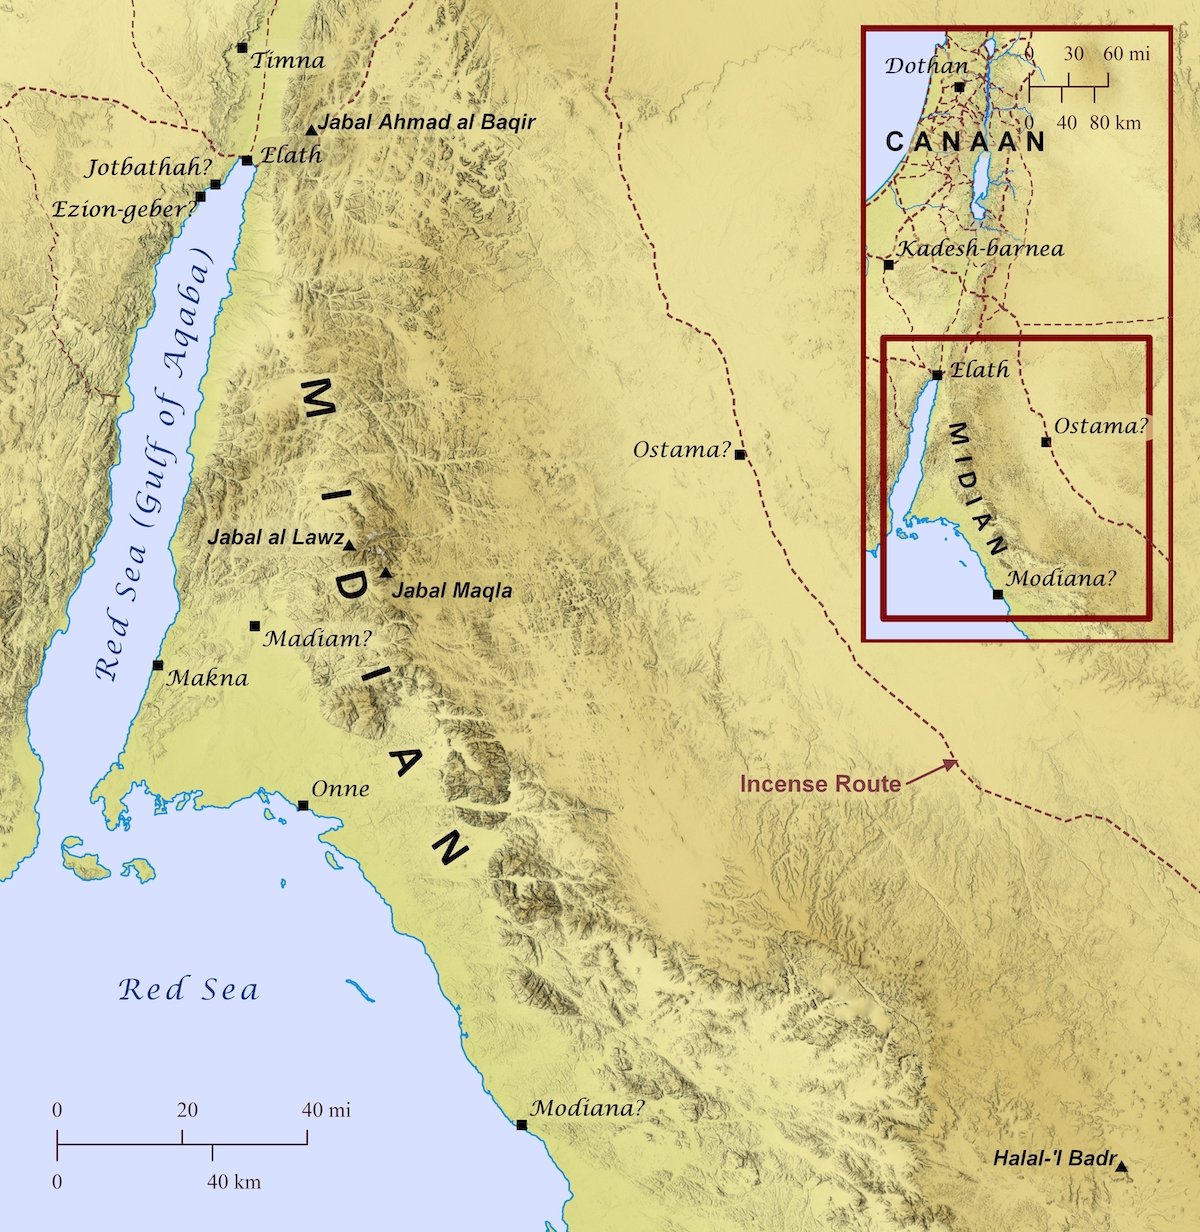 Map of Midian, including the location of Hala-‘l Bedr. Image courtesy of biblemapper.com